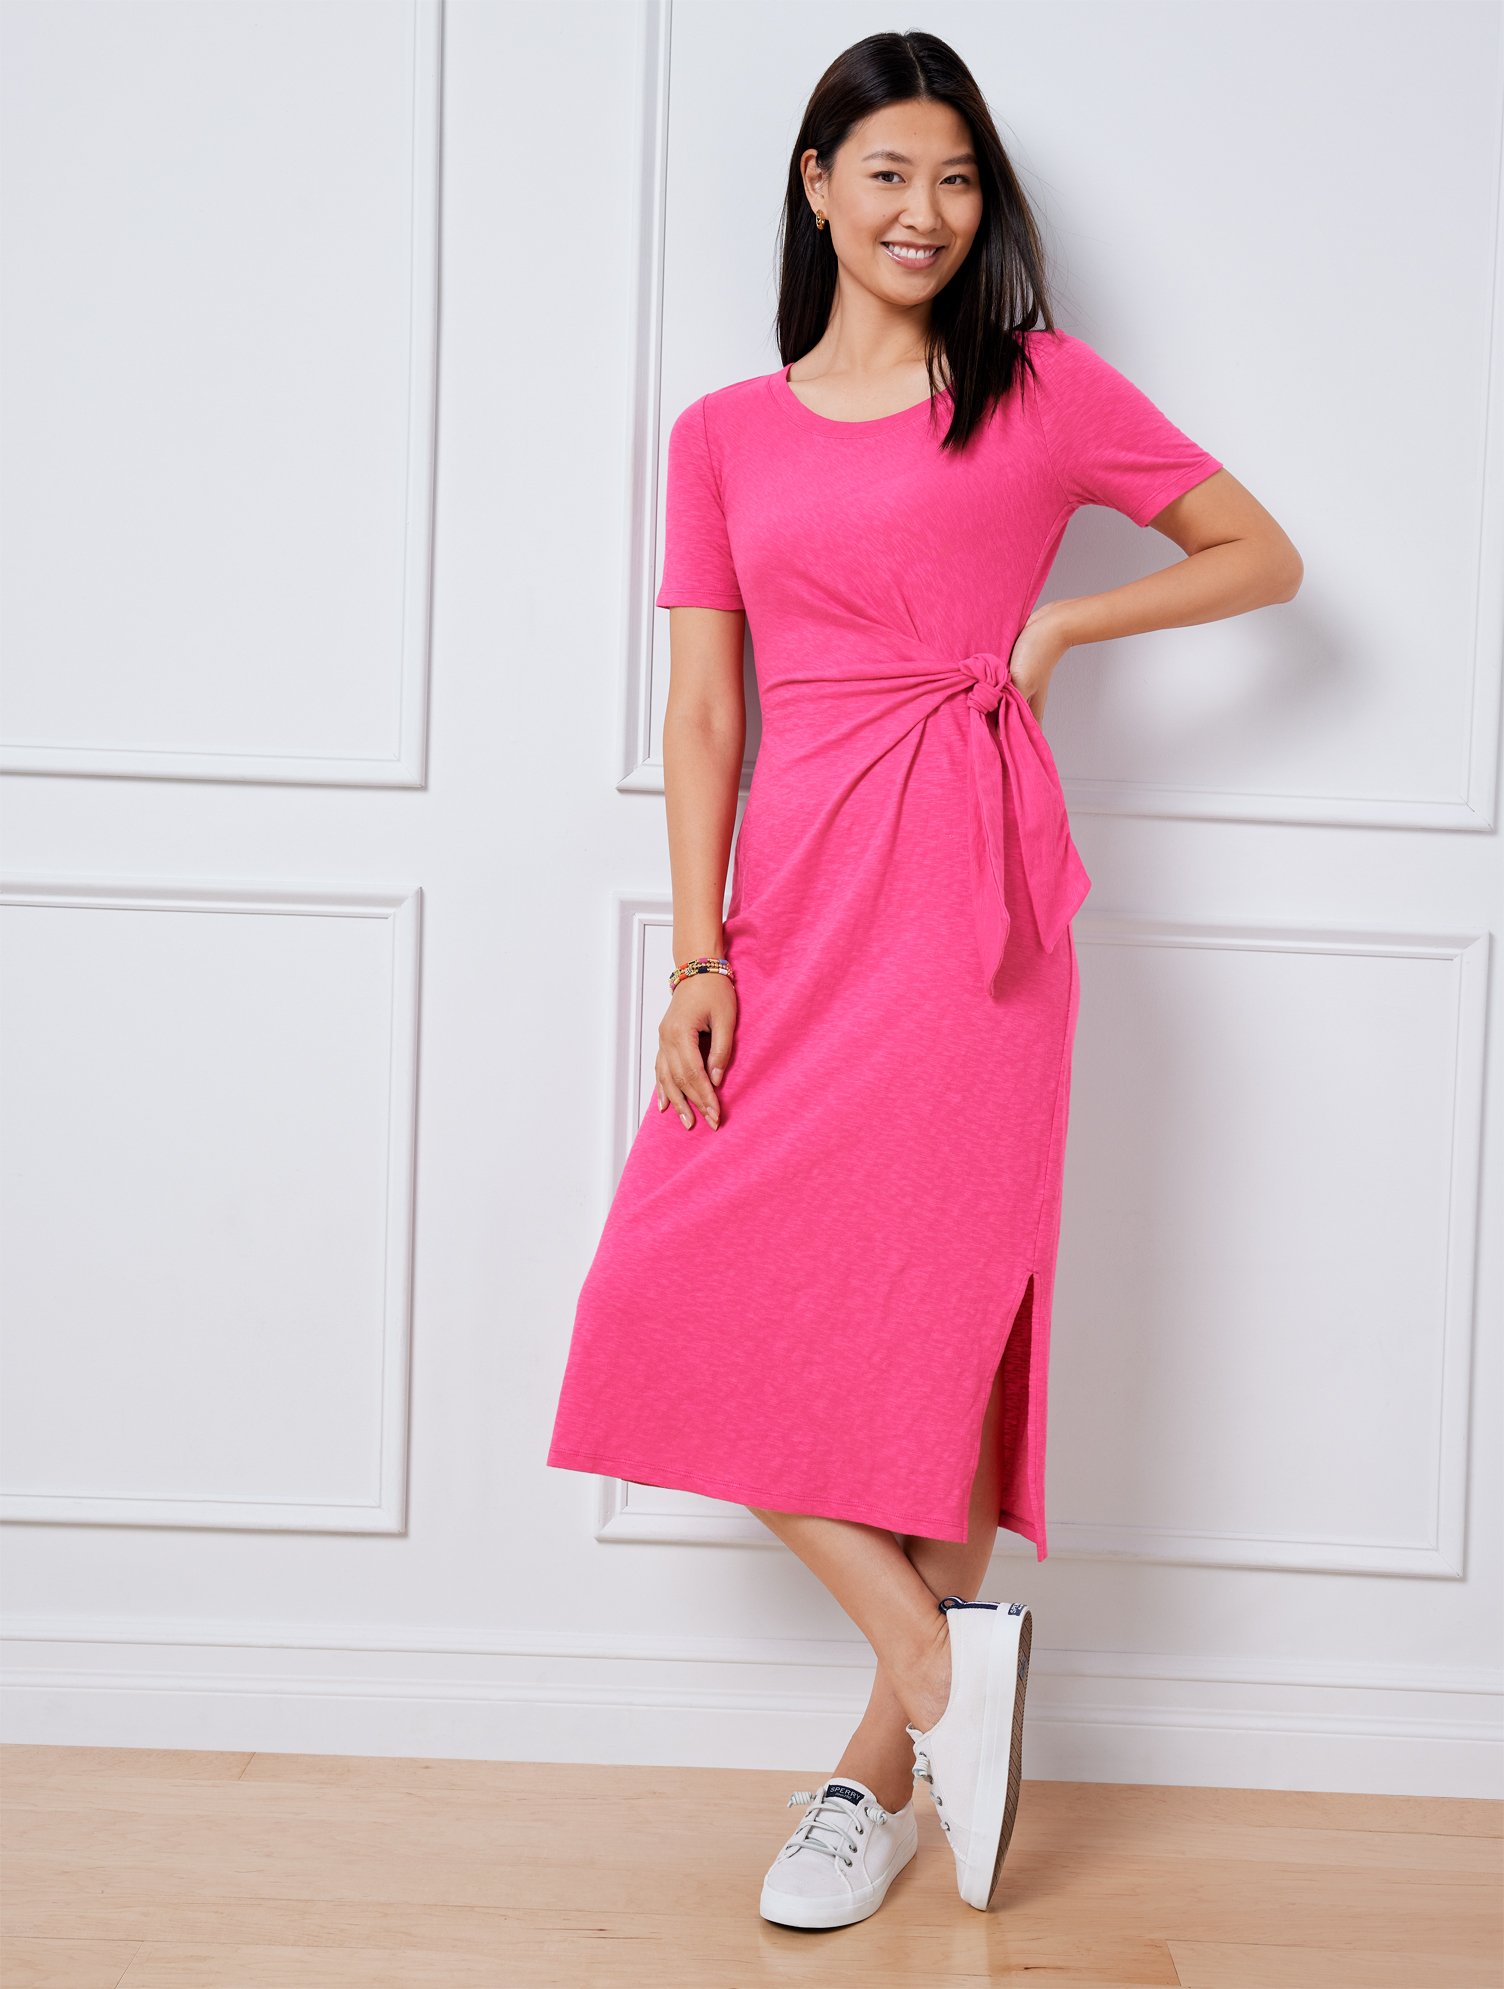 Talbots Nantucket Slub Side Tie Midi Dress - Vivid Pink - Xl - 100% Cotton